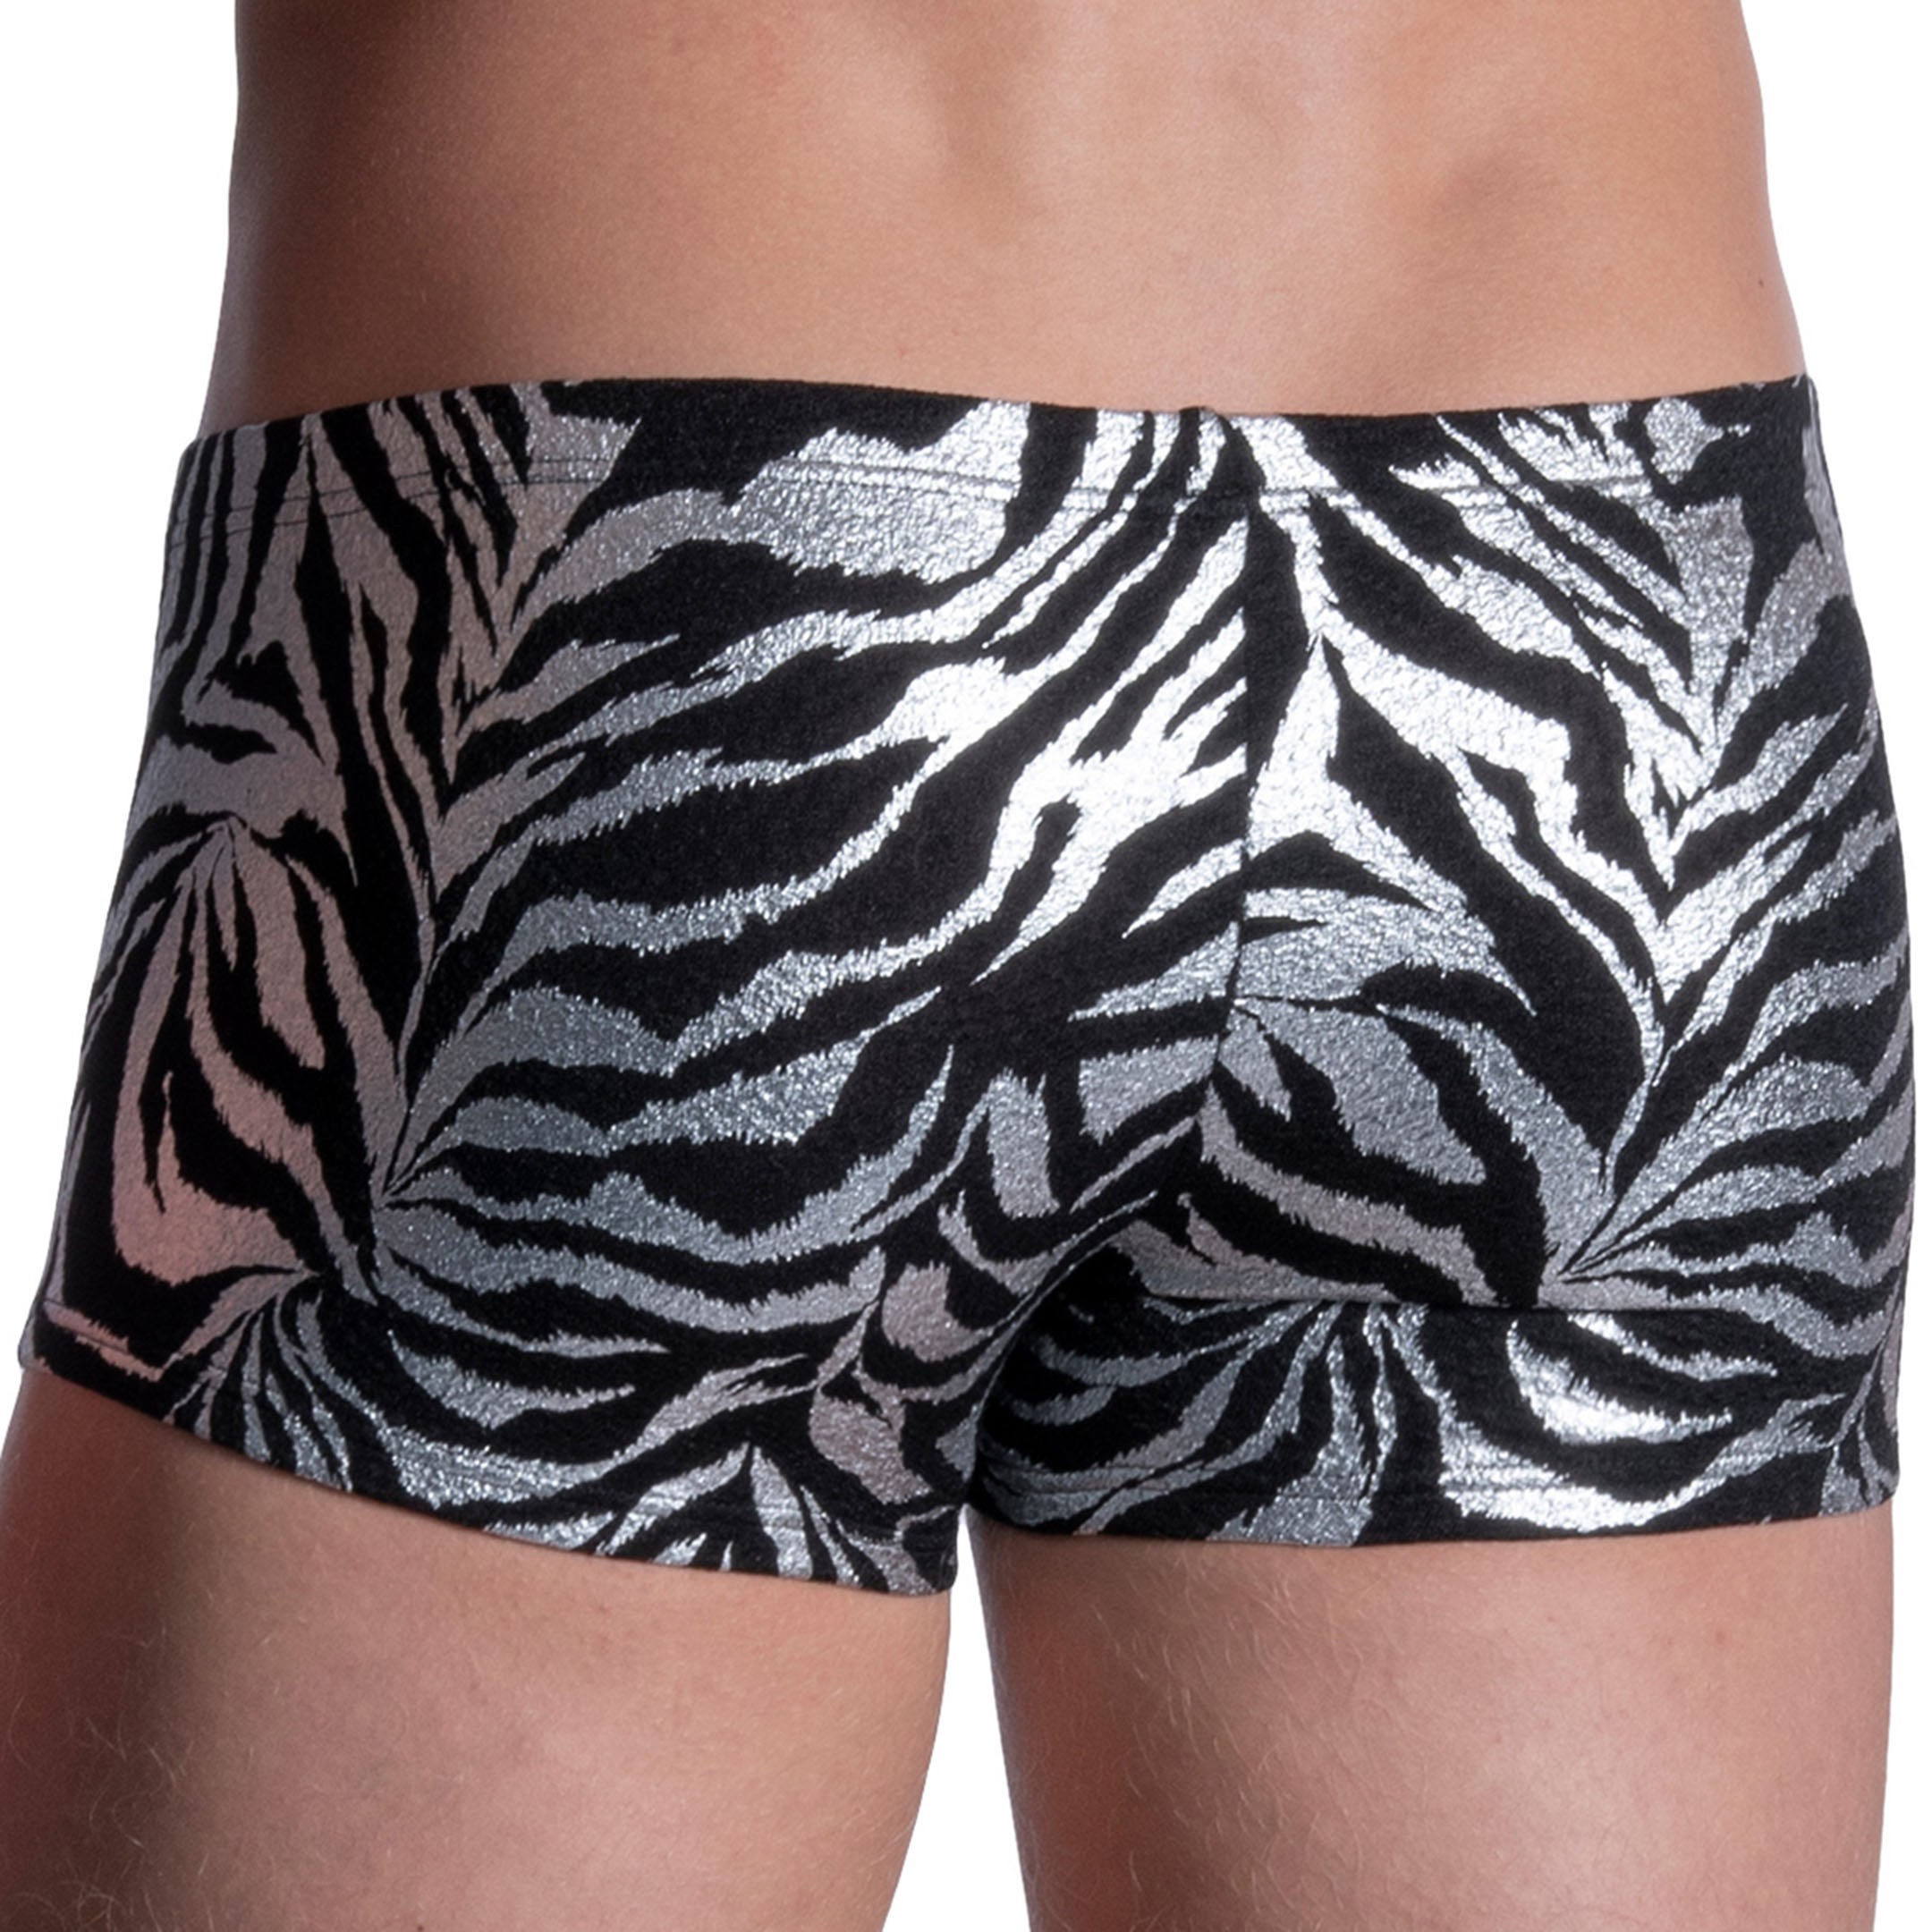 Male Men's Leopard Print Tarzan Brief Underwear Shorts Underpants Tank Top Vest 